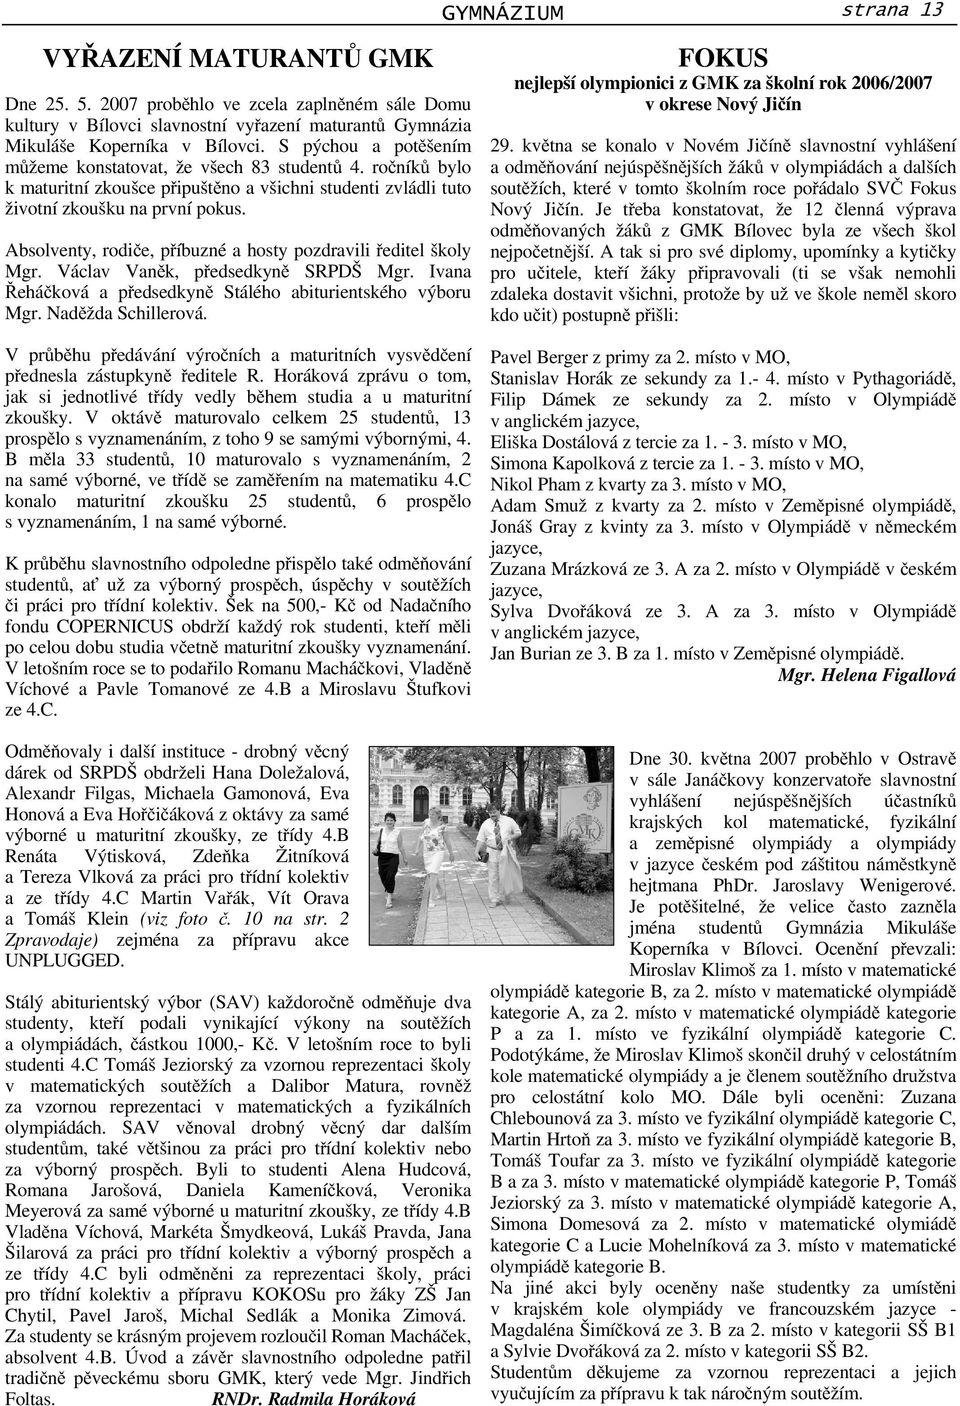 SLOVO STAROSTKY M STA - PDF Stažení zdarma